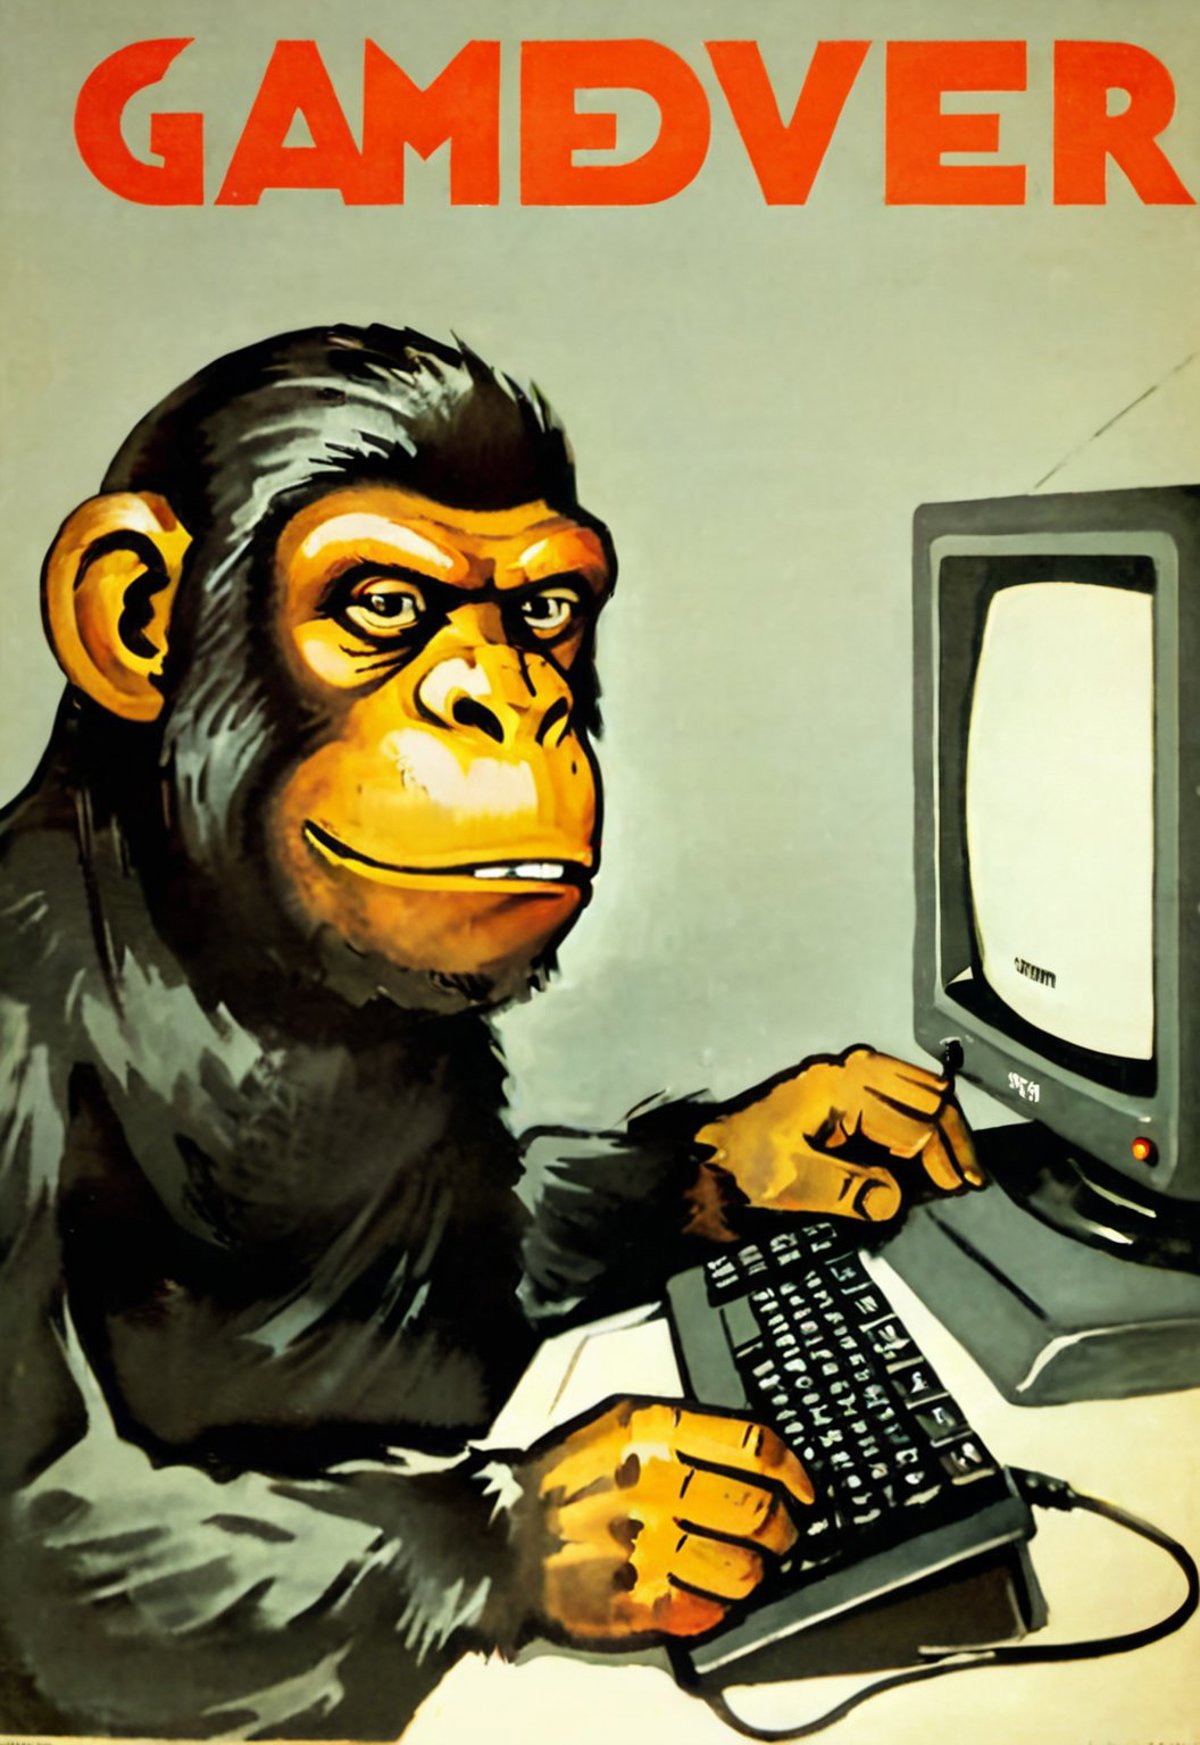 A chimpanzee using a computer keyboard on a desk.